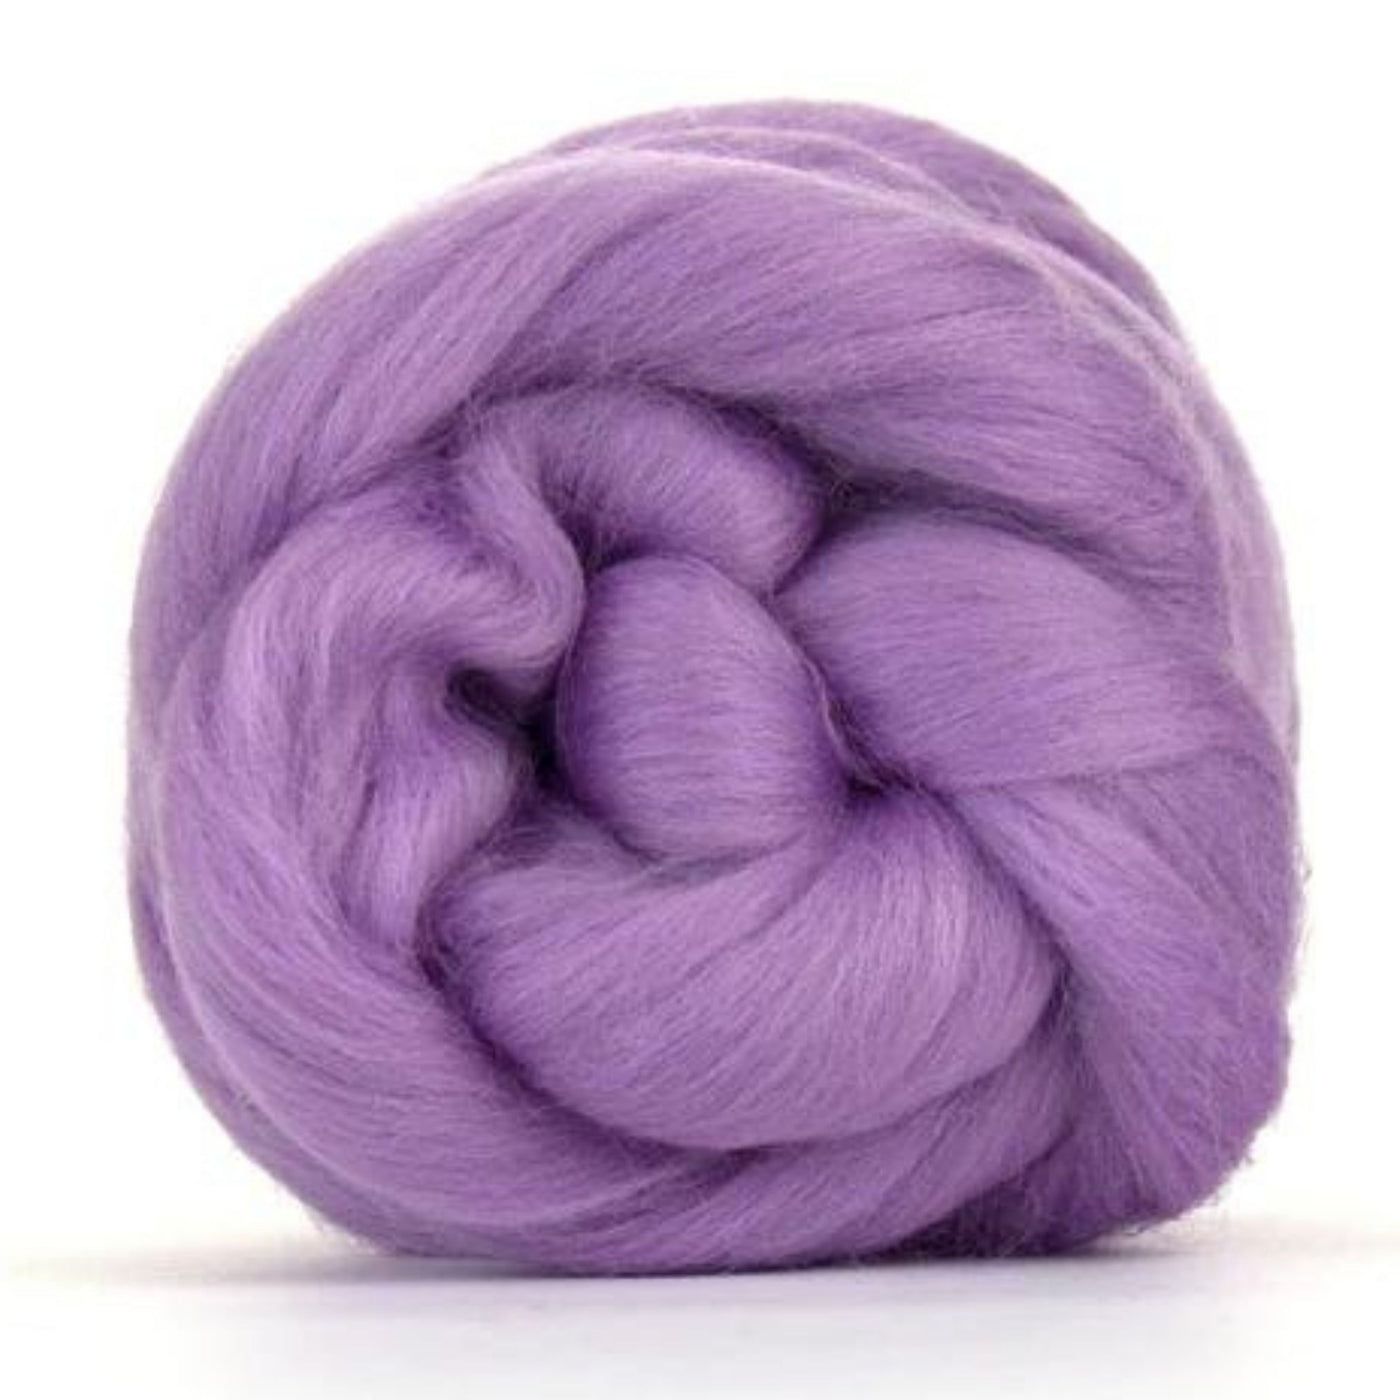 Dyed Merino Wool Tops | Premium 22 Micron, 64 Count Wool